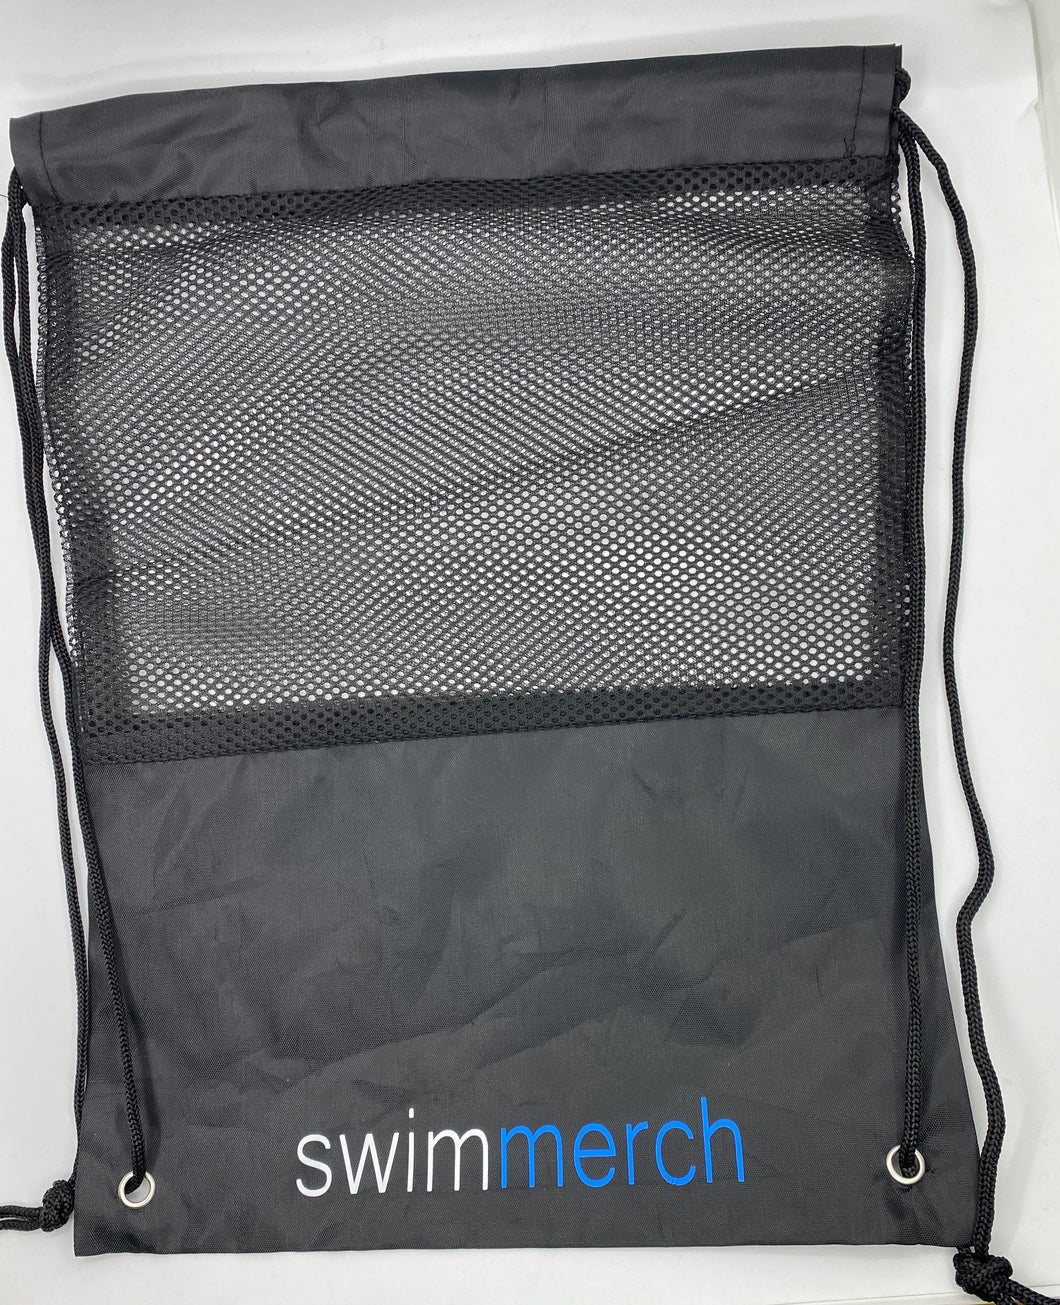 Mesh swim bag - Personalised included